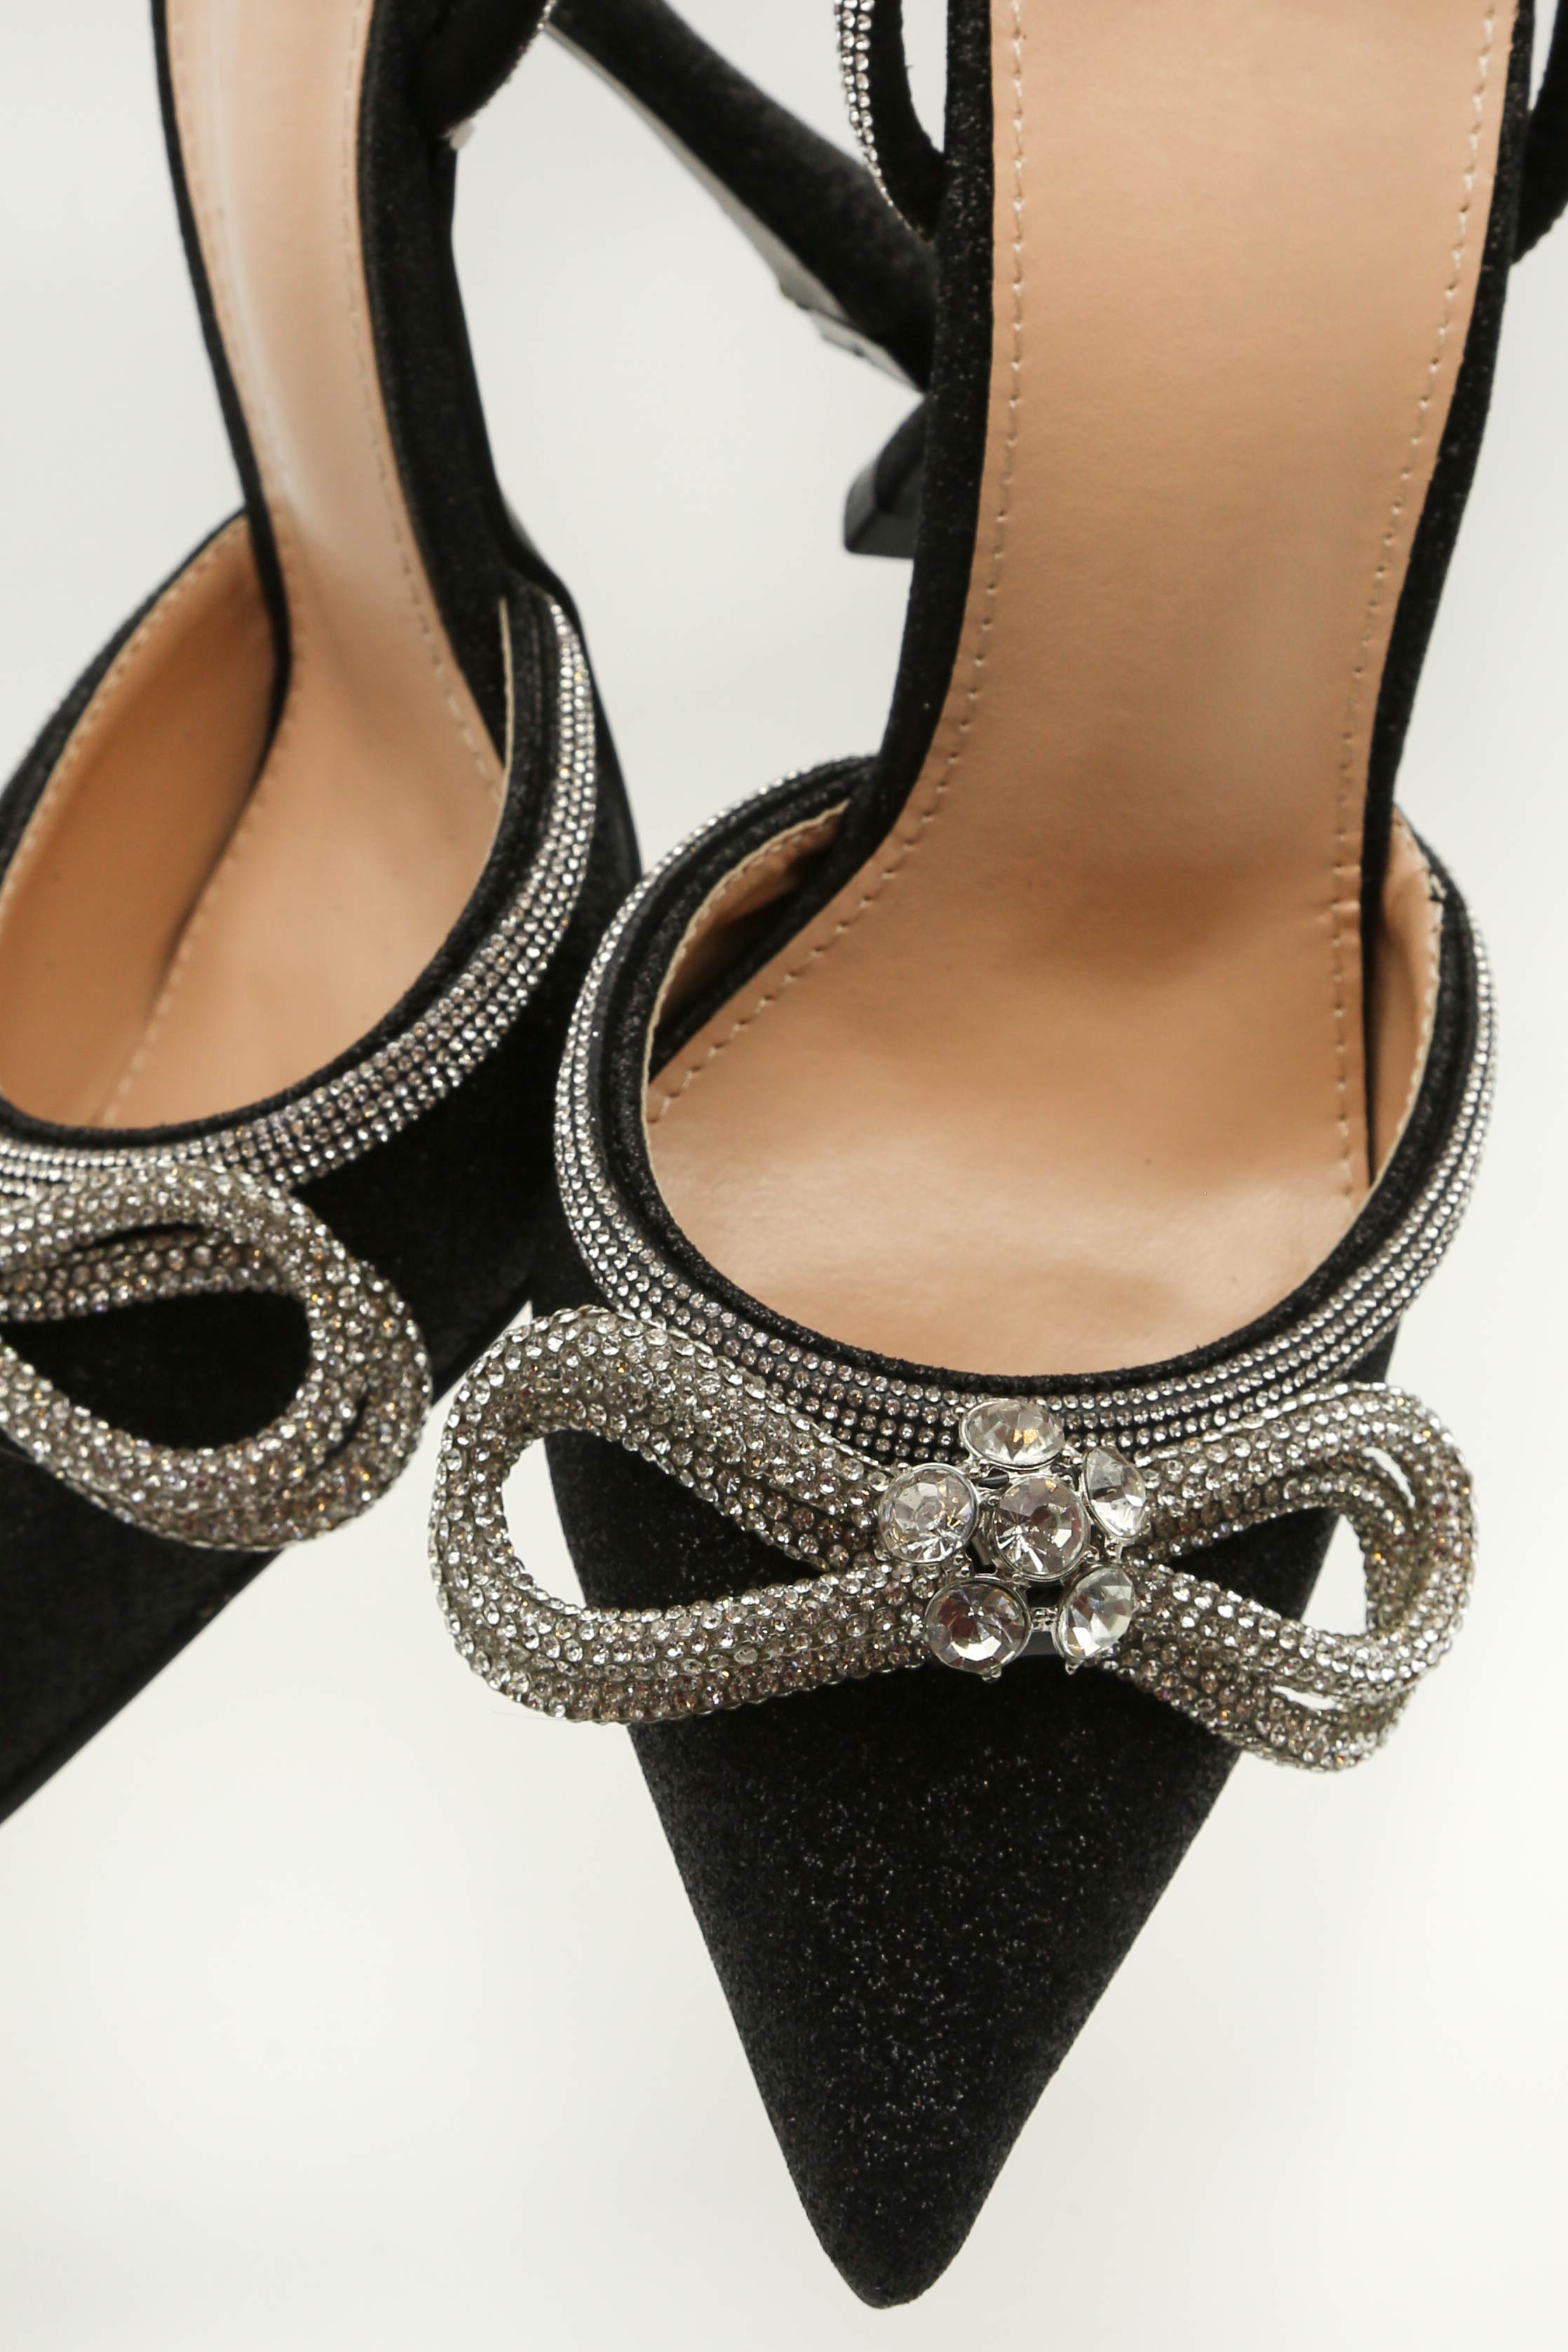 Gianni Bini Black Leather Peep Toe Stiletto High 3” Heels Bow Tie Shoes |  eBay